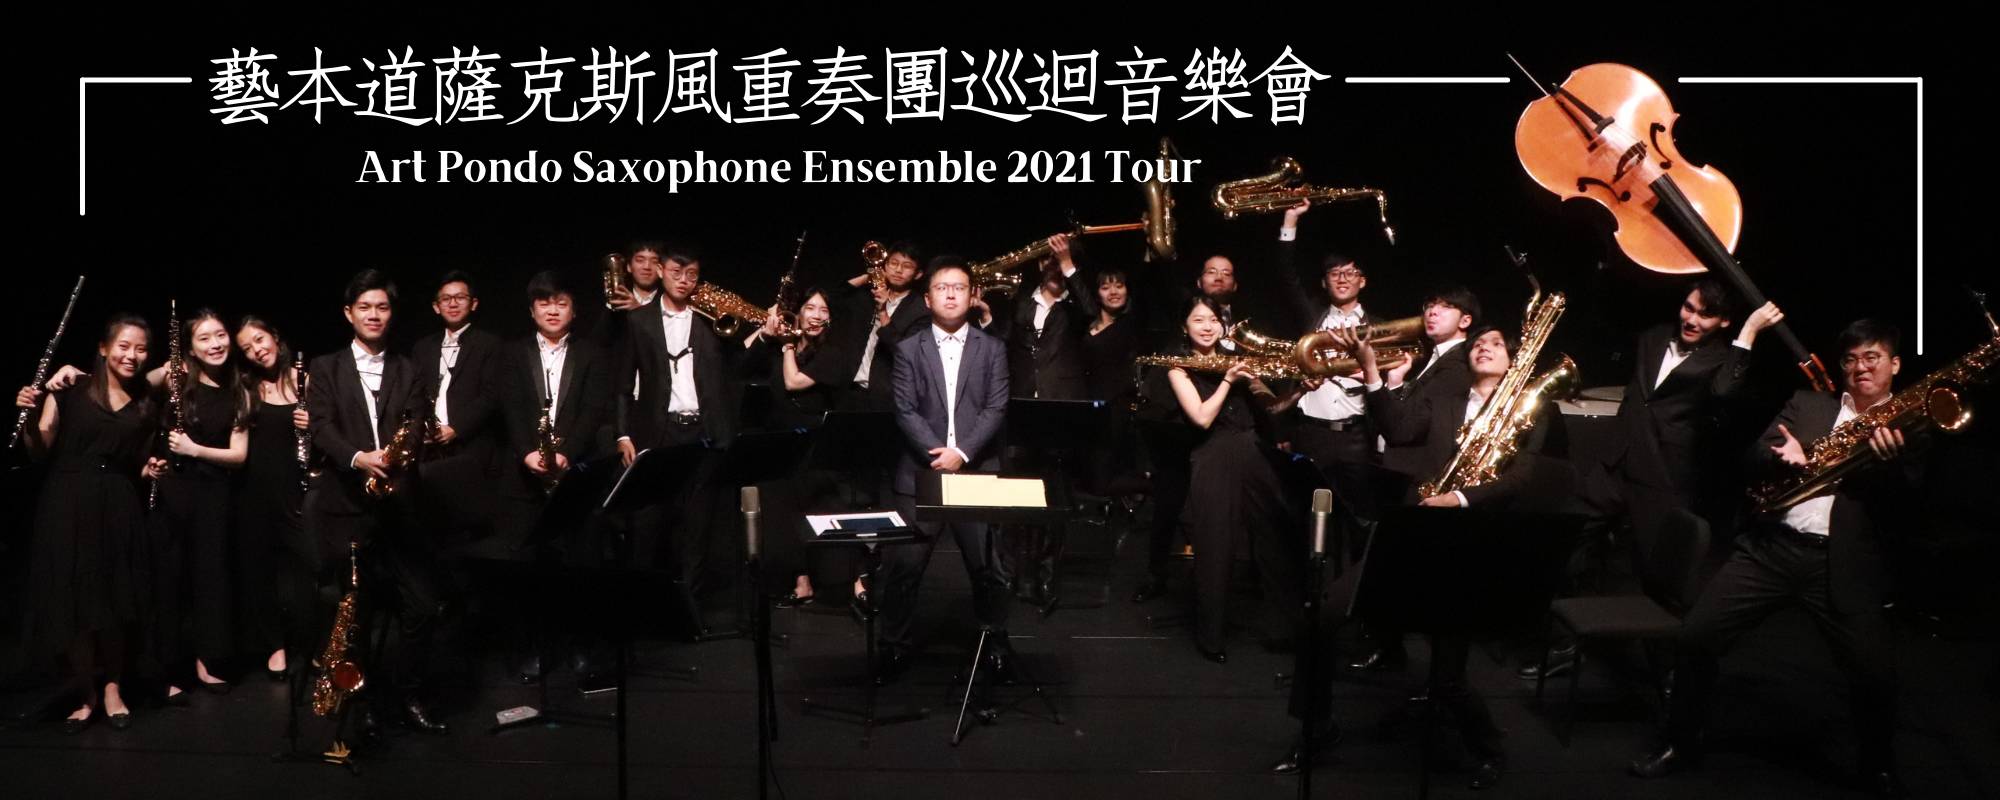 Artpondo Saxophone Emsemble Concert Tours